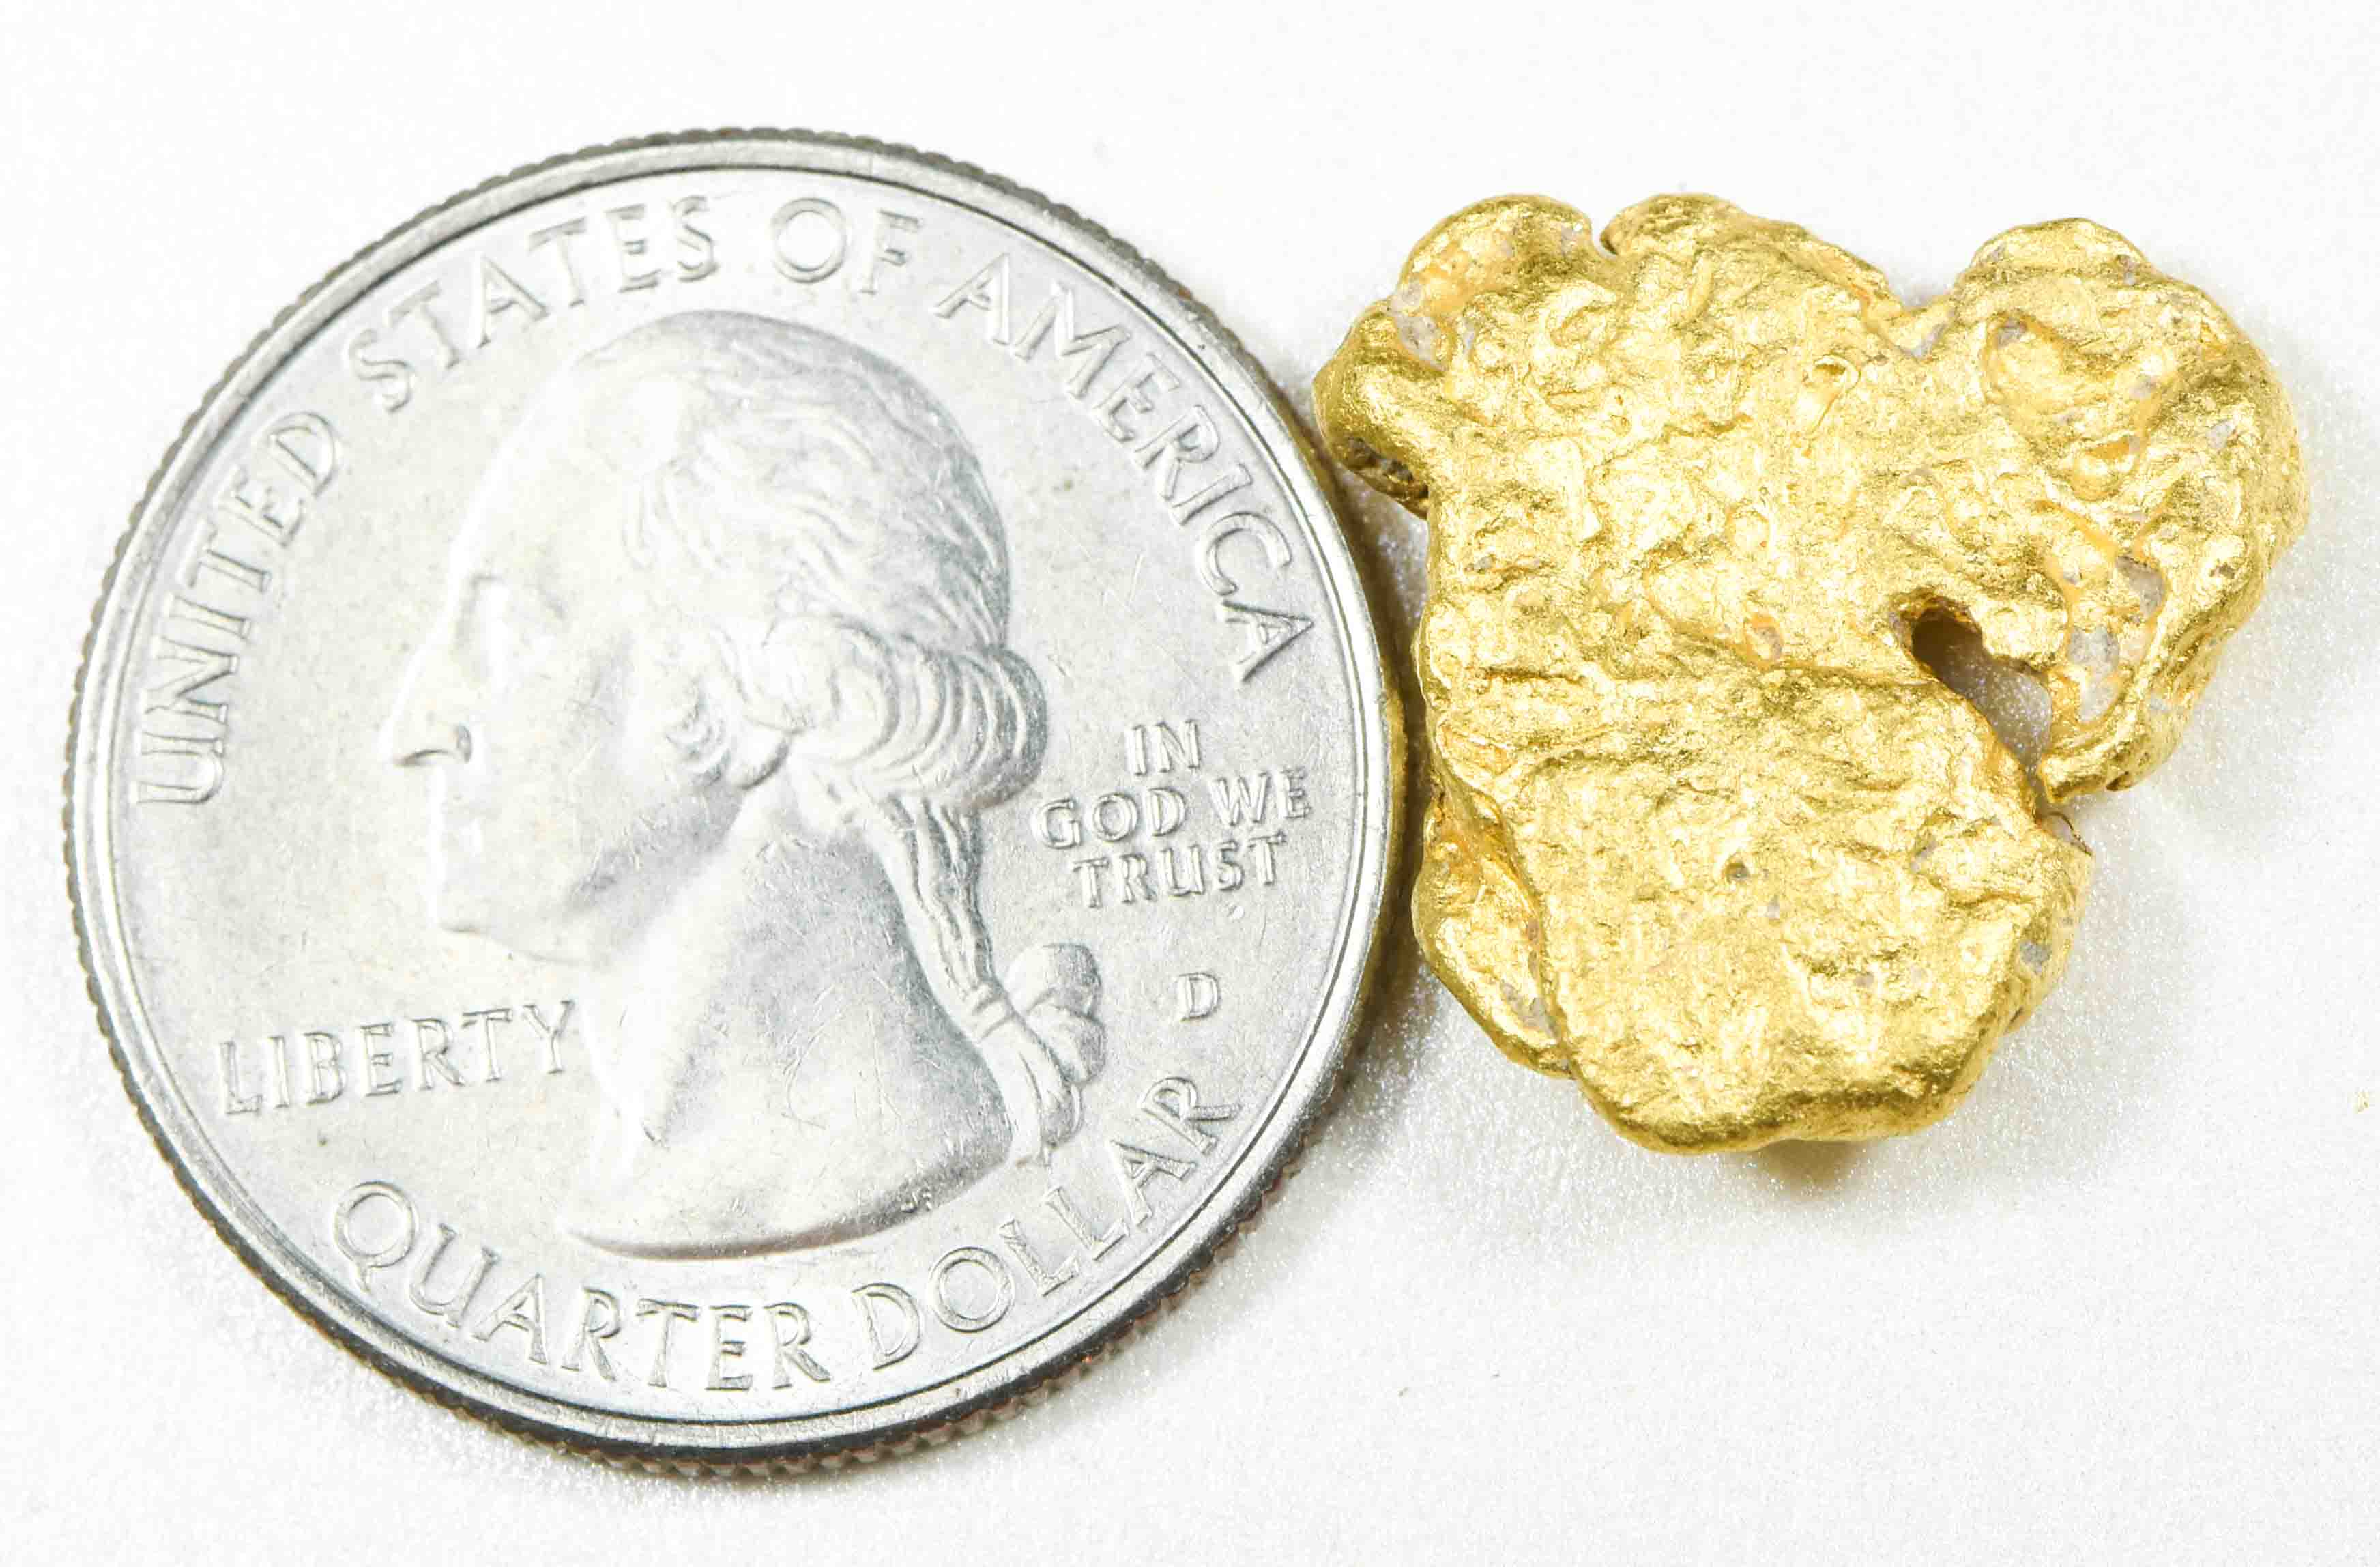 #1193 Natural Gold Nugget Australian 8.36 Grams Genuine